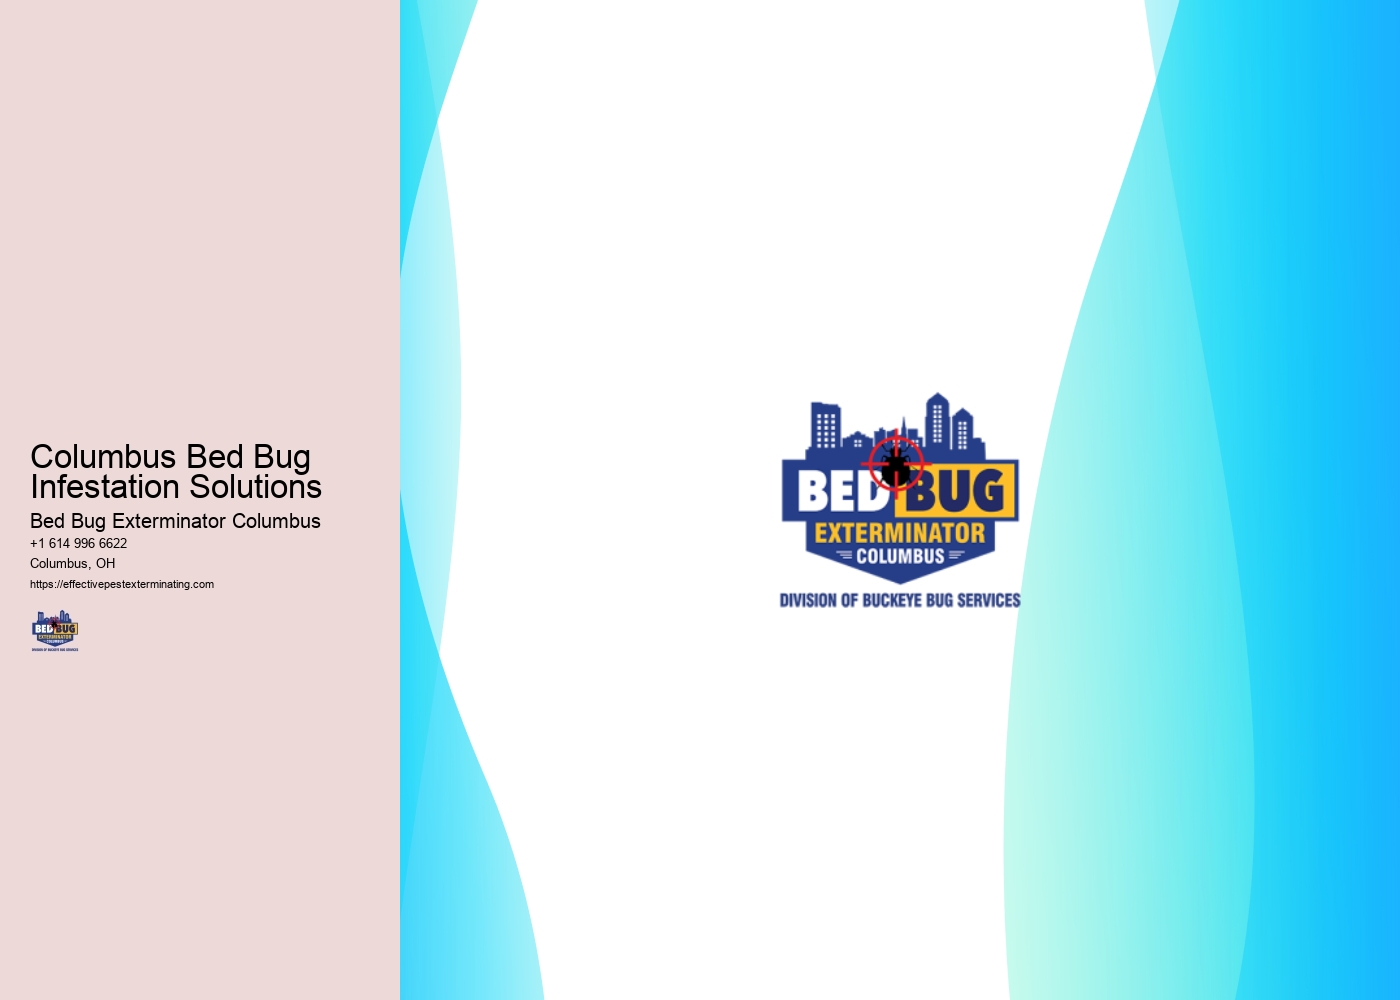 Columbus Bed Bug Infestation Solutions